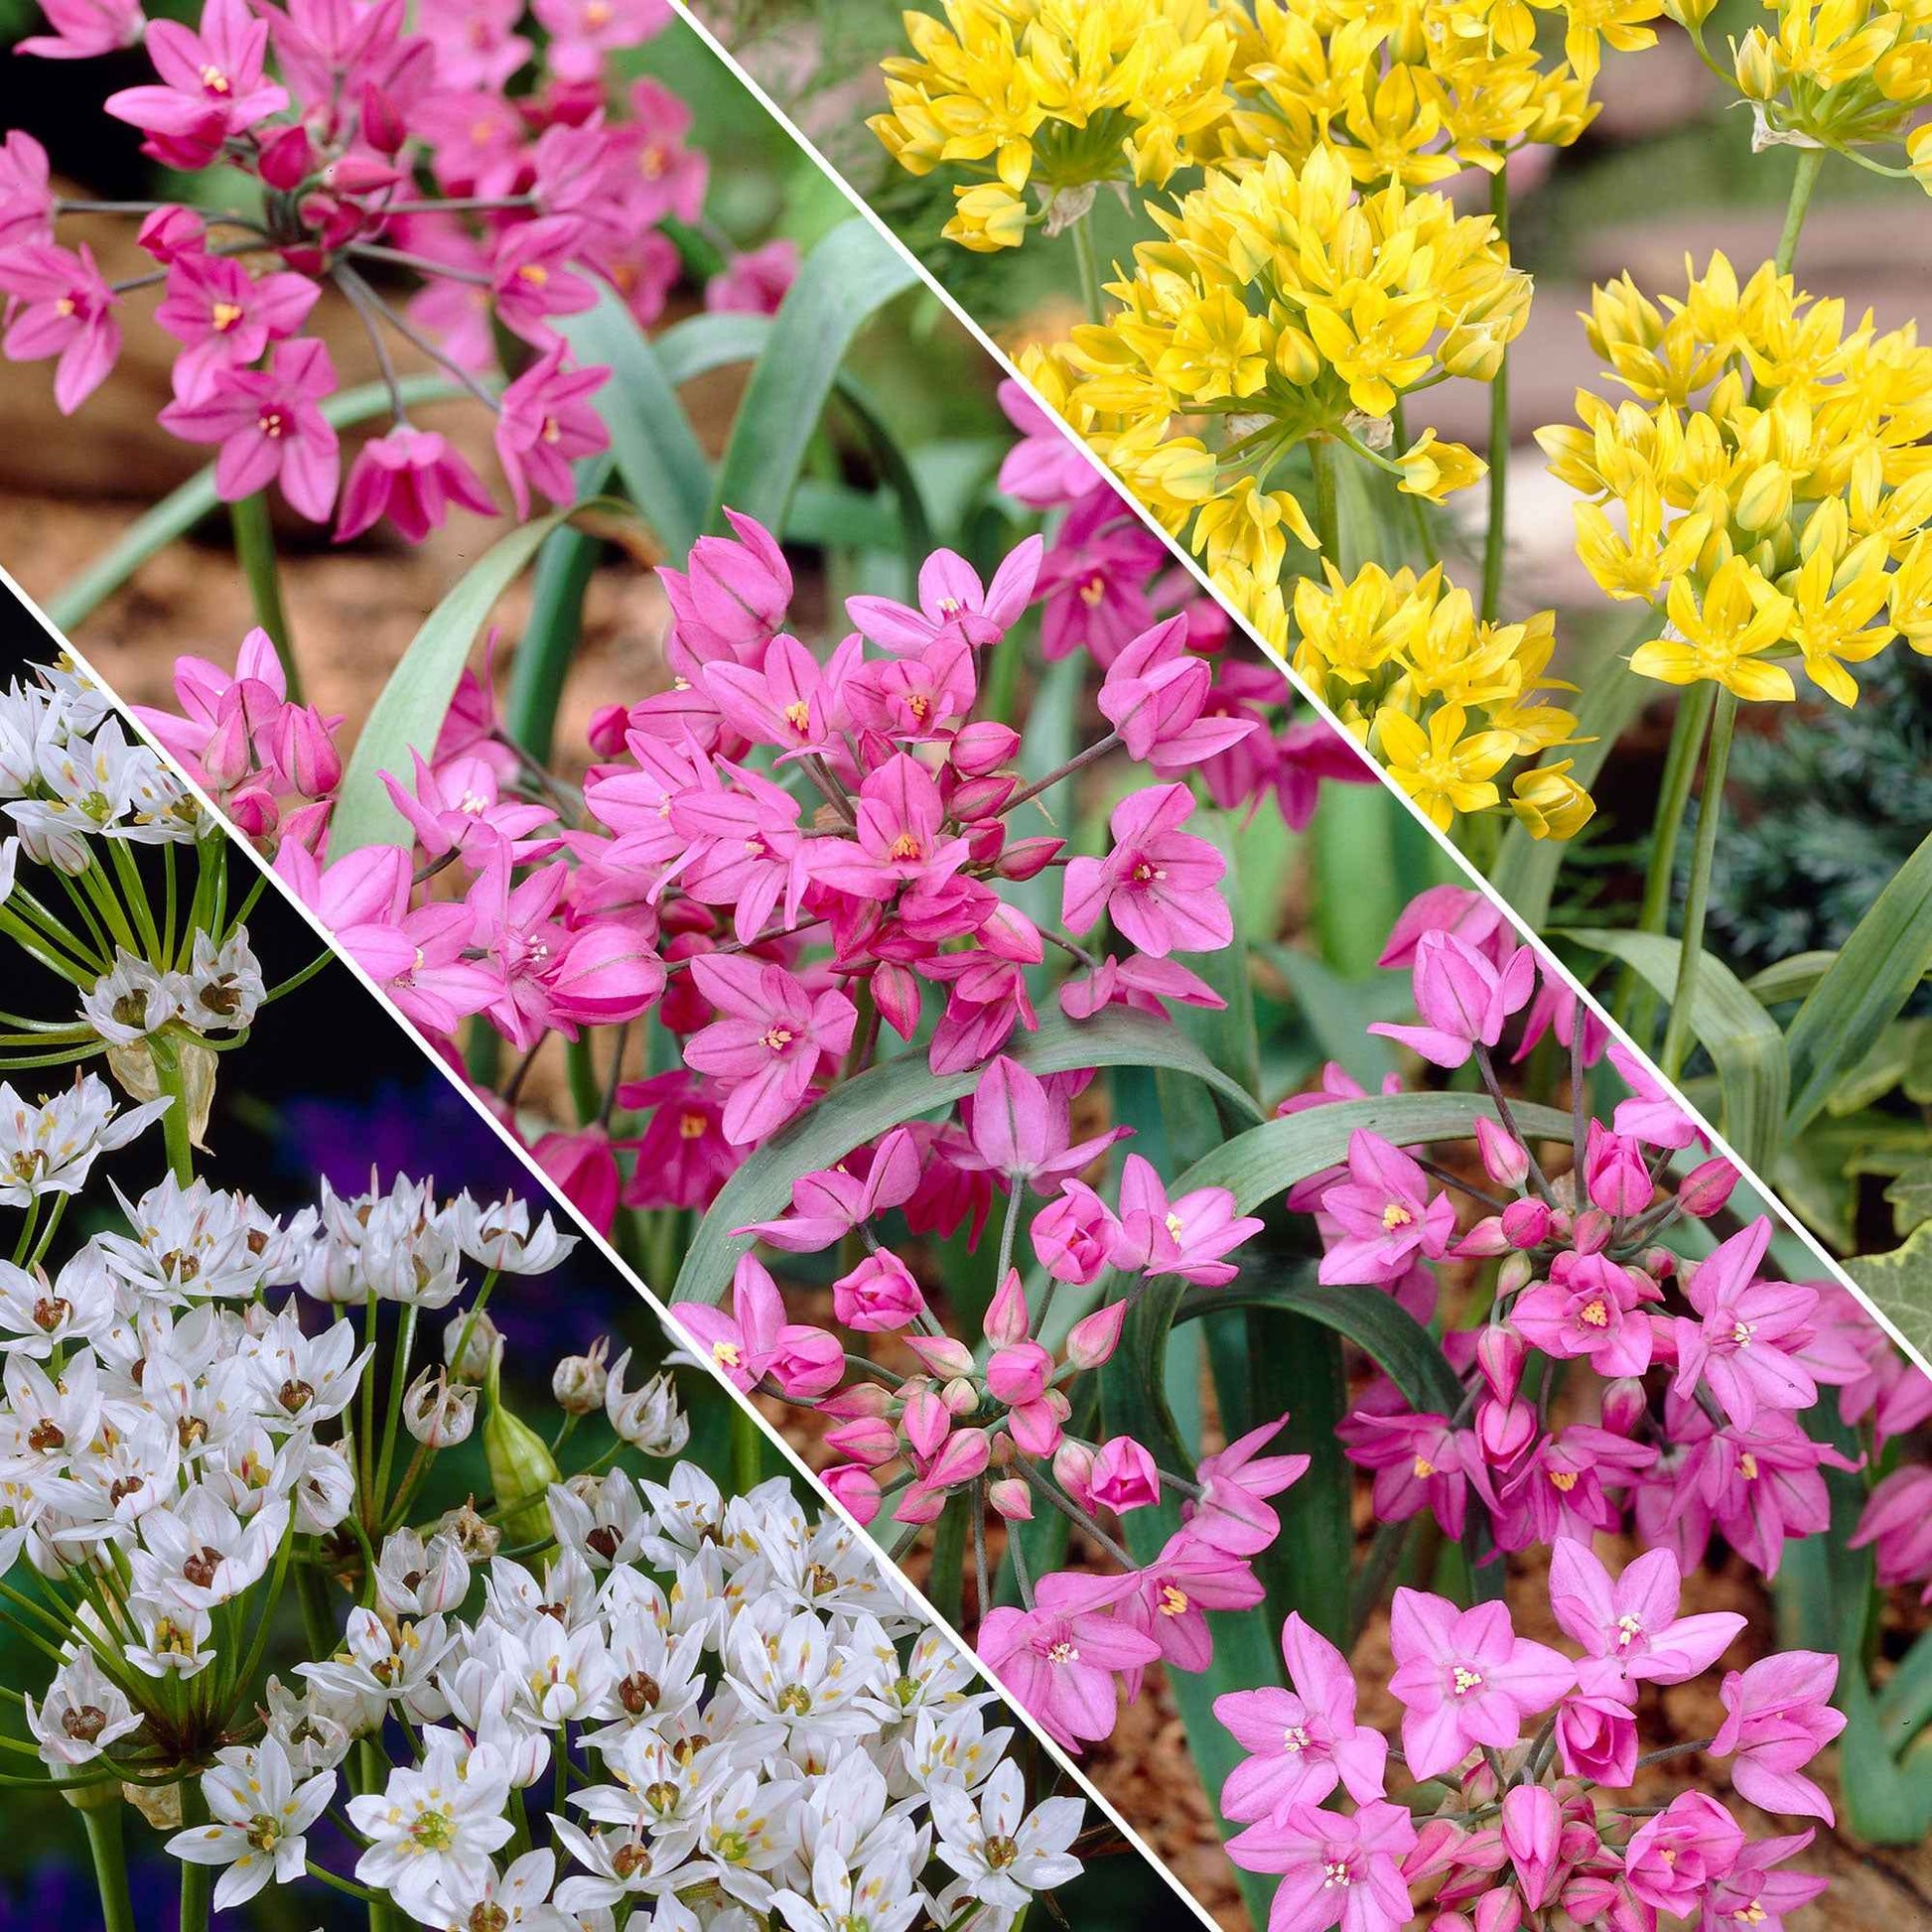 200x Sierui Allium - Mix Butterfly geel-wit-roze Geel-Wit-Roze - Alle populaire bloembollen